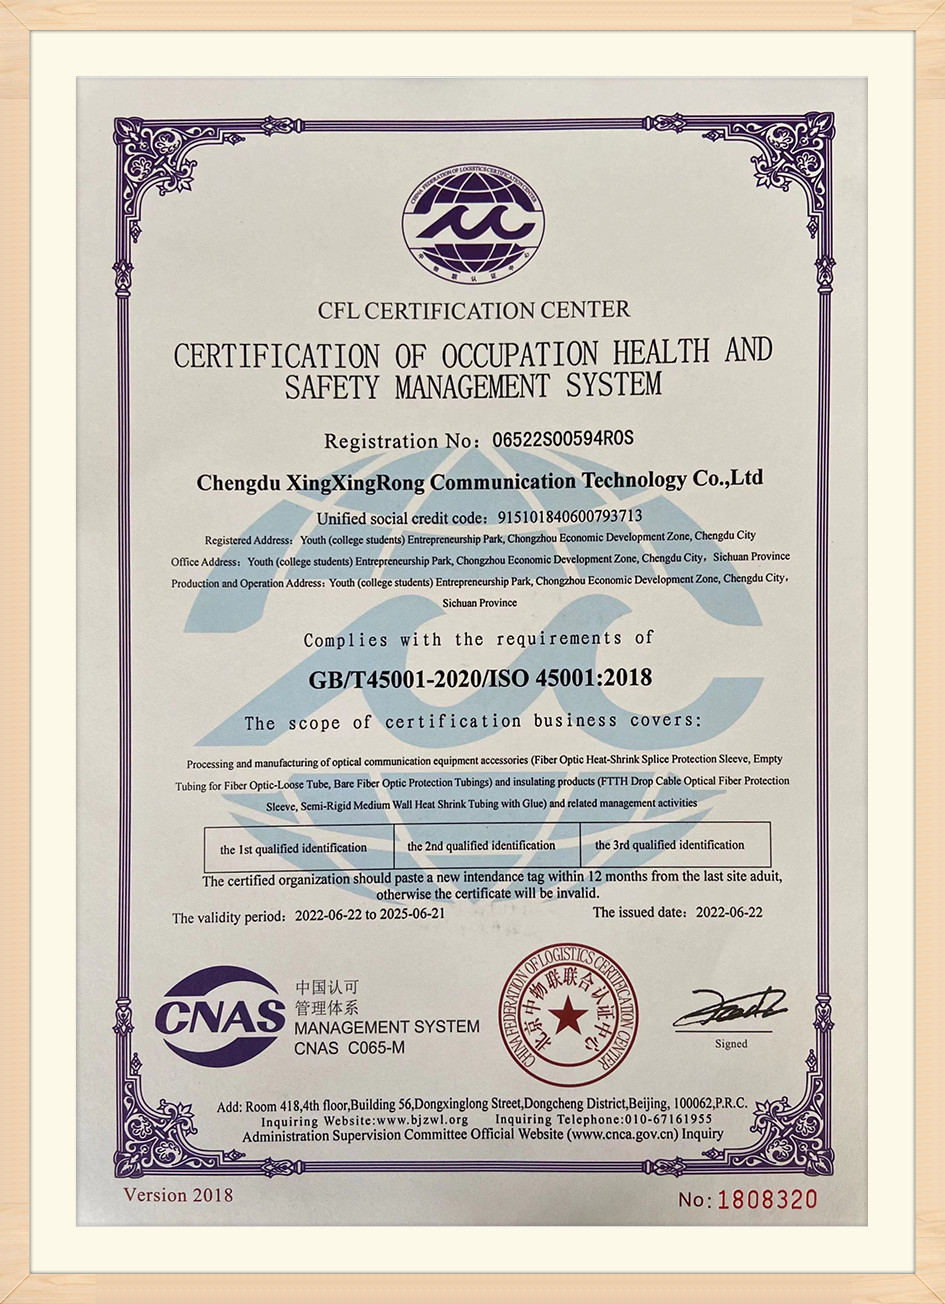 Сертификат-4